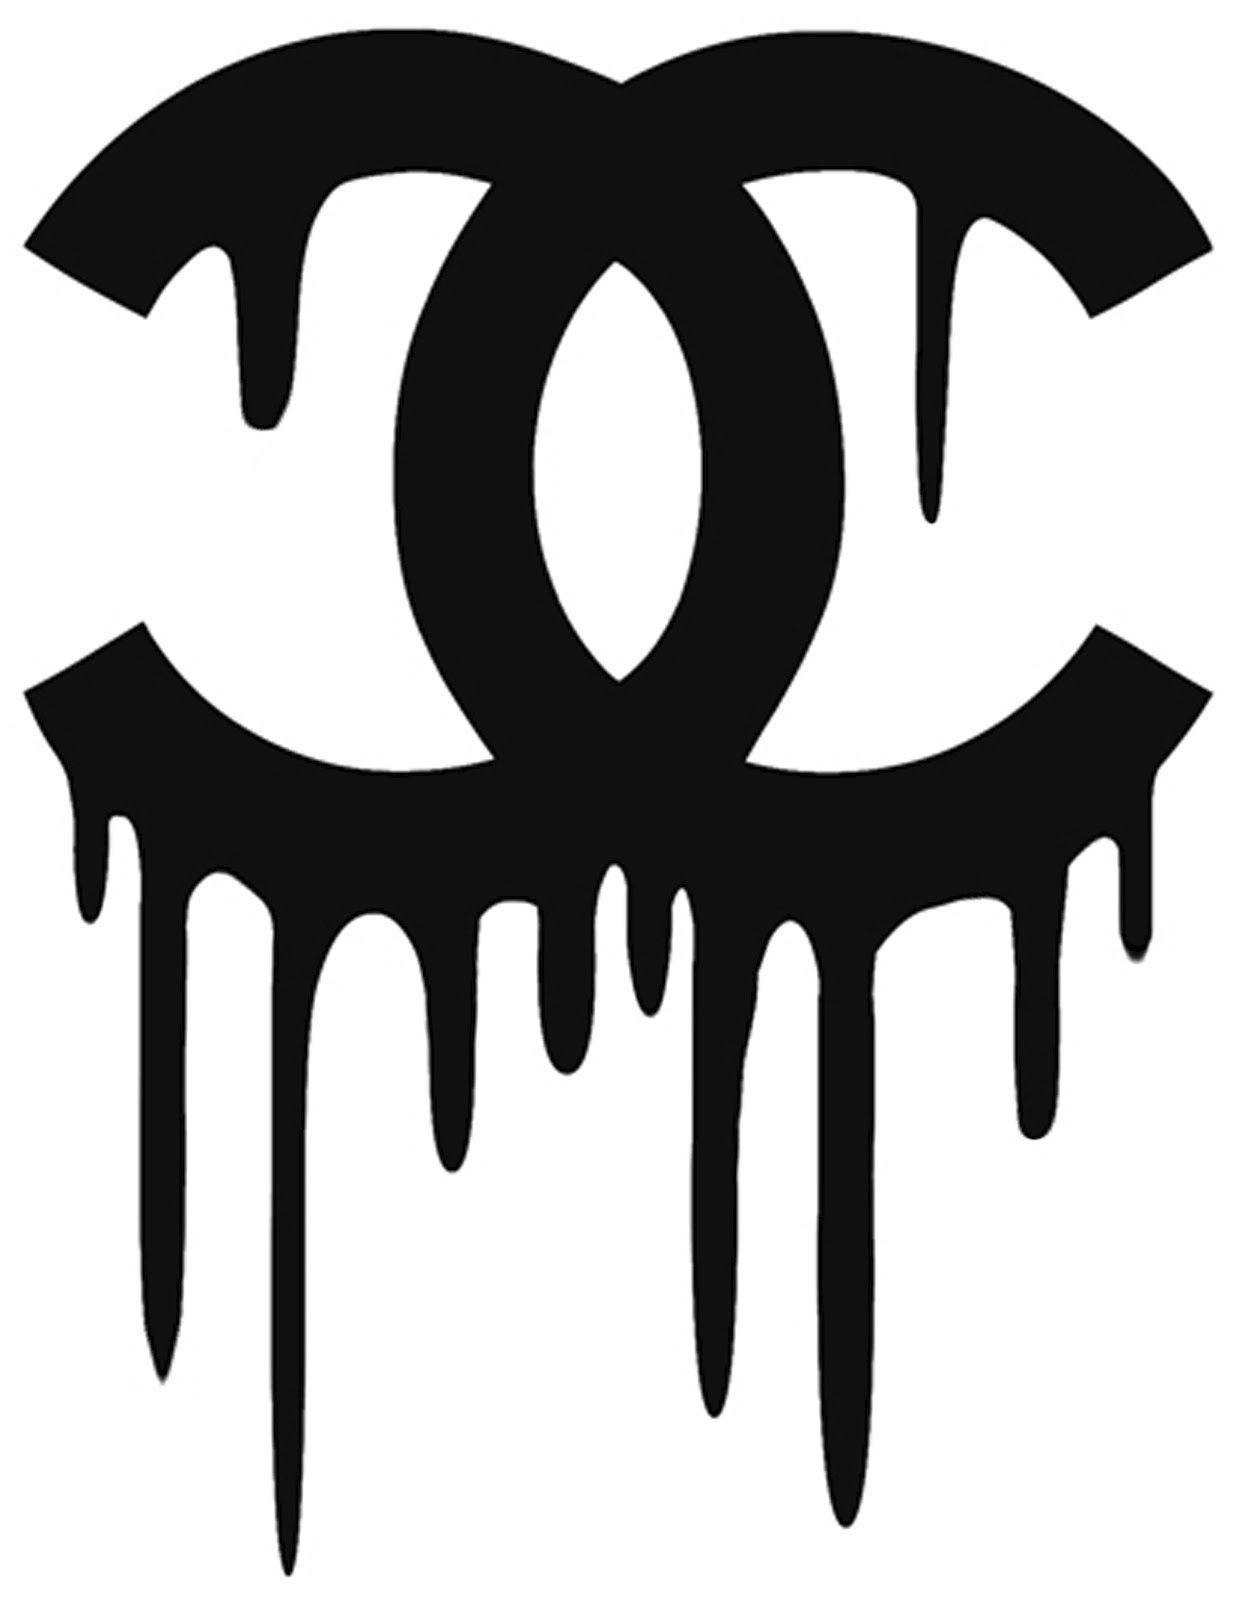 Chanel Makeup Logo - Chanel Logo. tats. Chanel logo, Chanel and Coco chanel